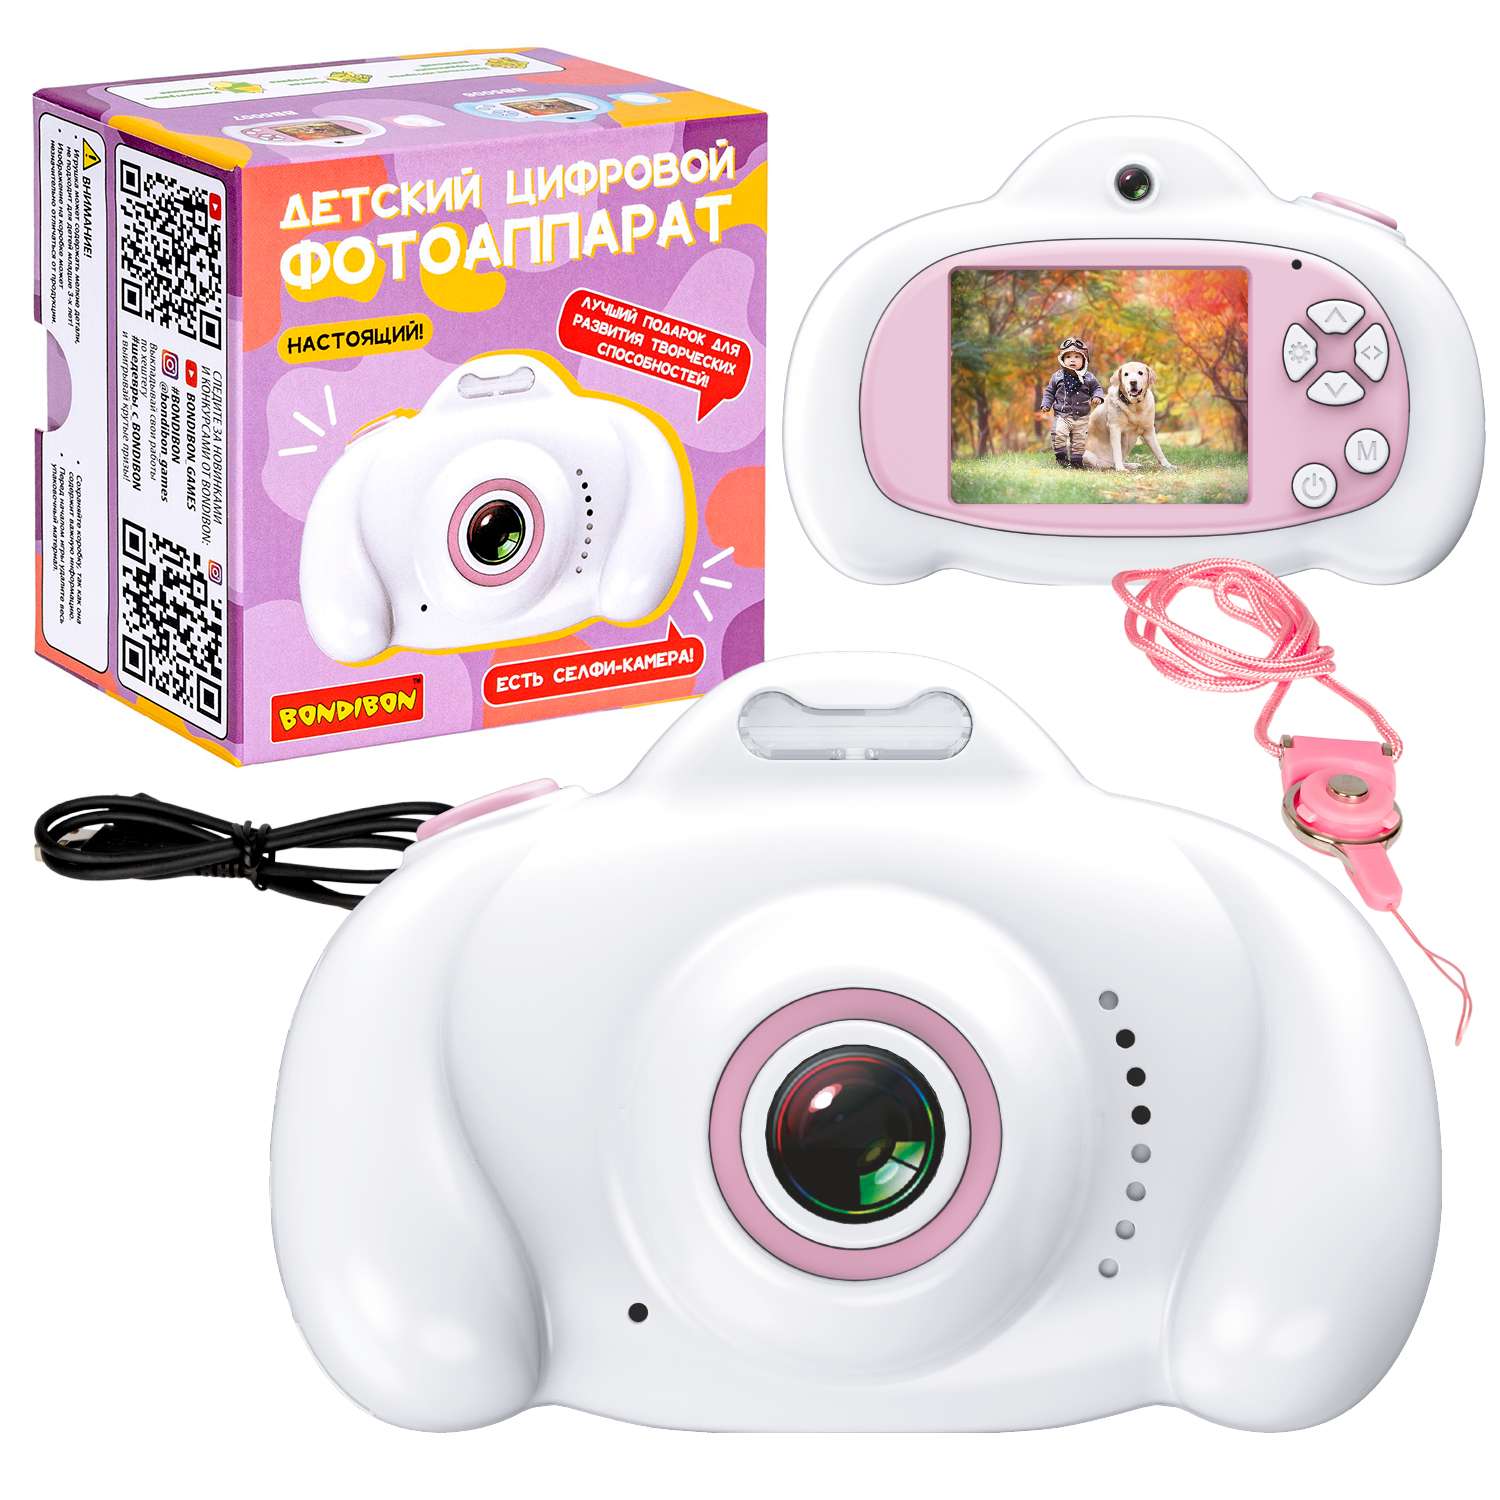 Цифровой фотоаппарат BONDIBON с селфи камерой и видео съемкой белого цвета - фото 1